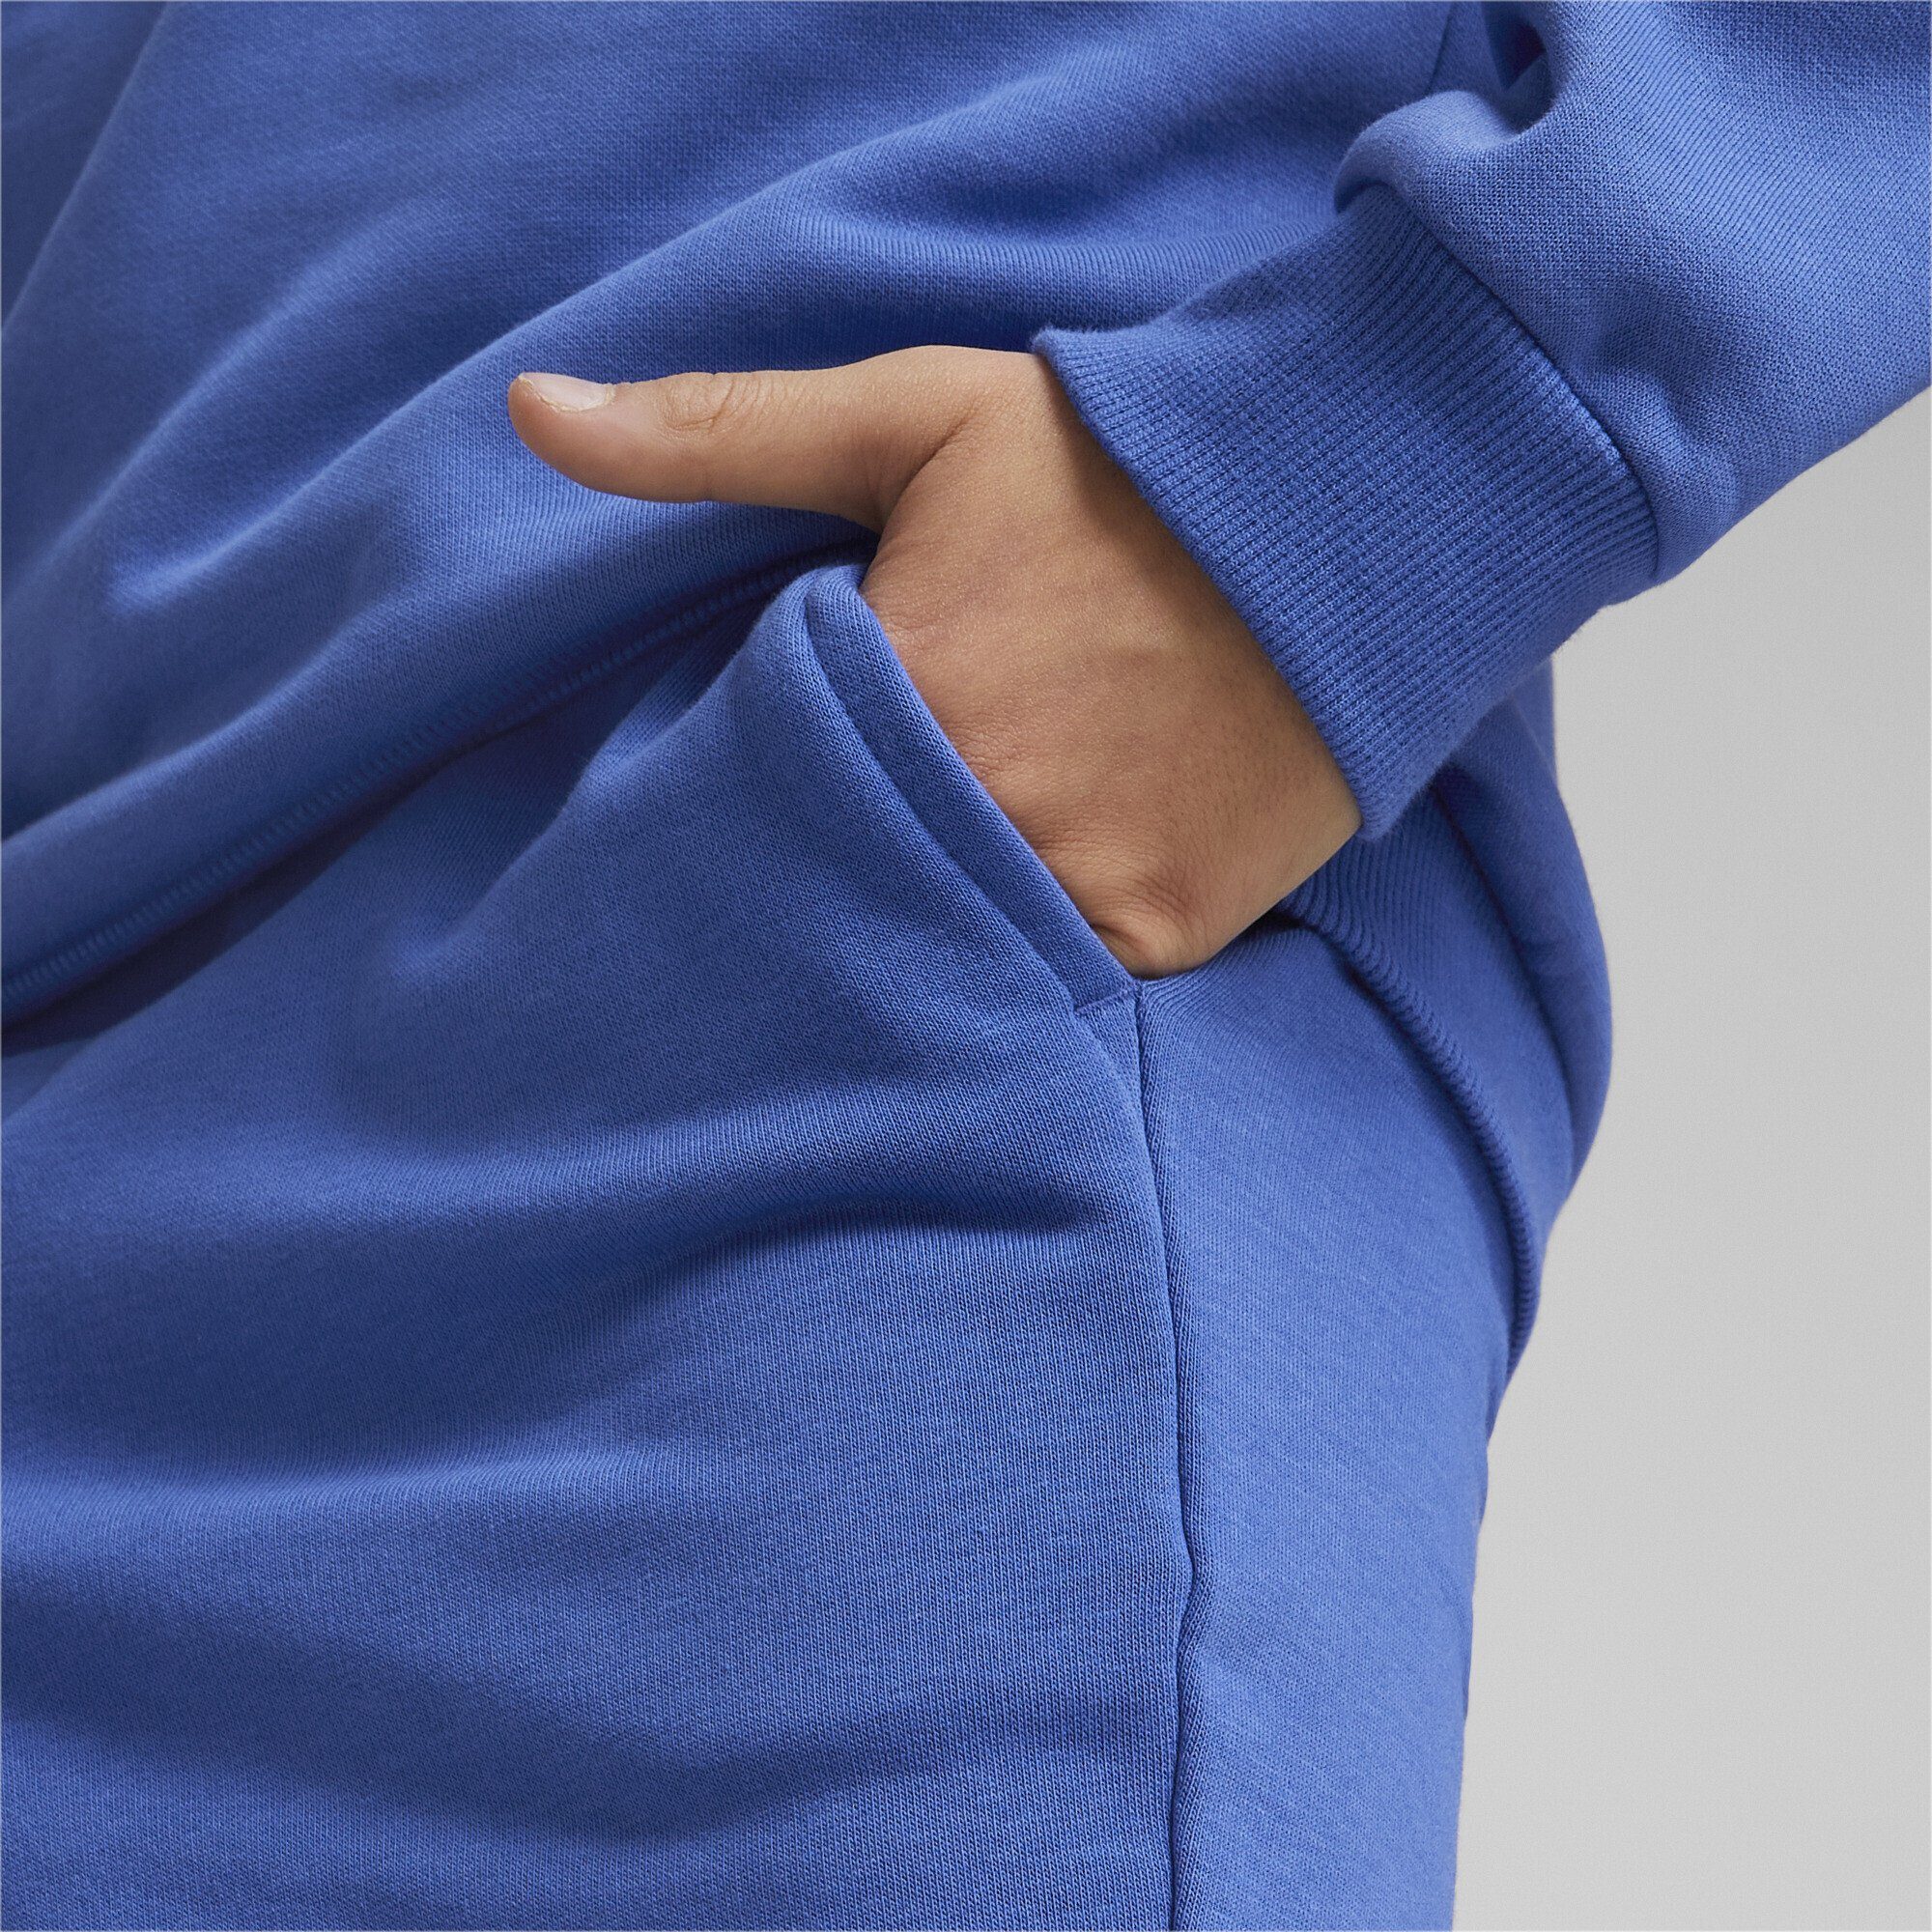 PUMA Sporthose Essentials+ Blue Jungen Shorts Two-Tone Sapphire Royal